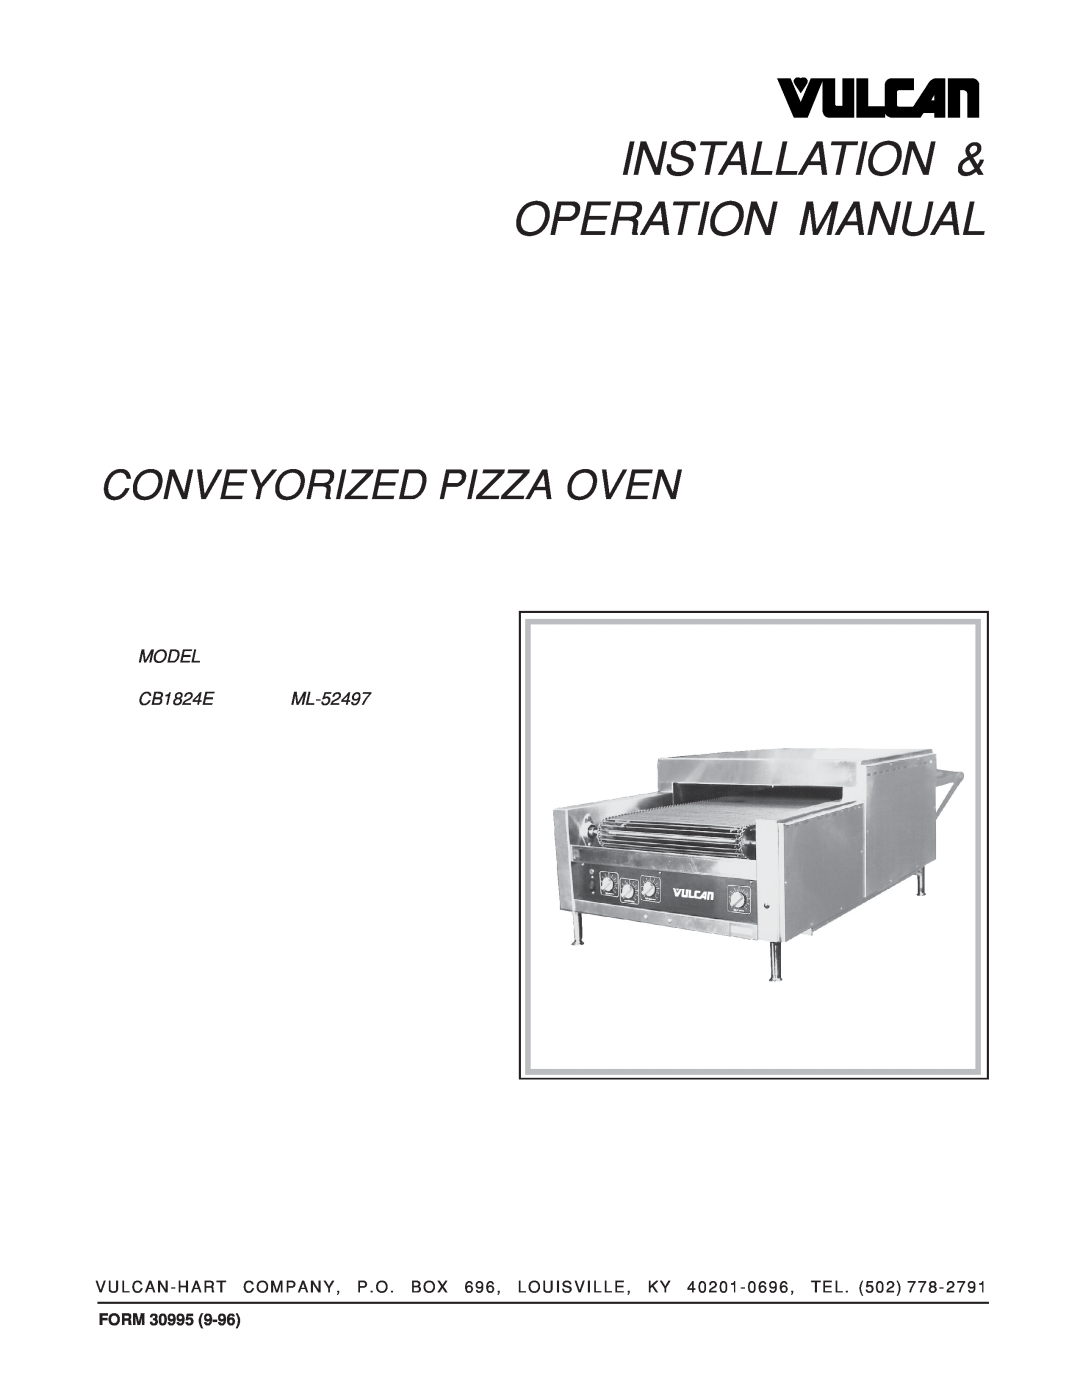 Vulcan-Hart operation manual Conveyorized Pizza Oven, MODEL CB1824E ML-52497 